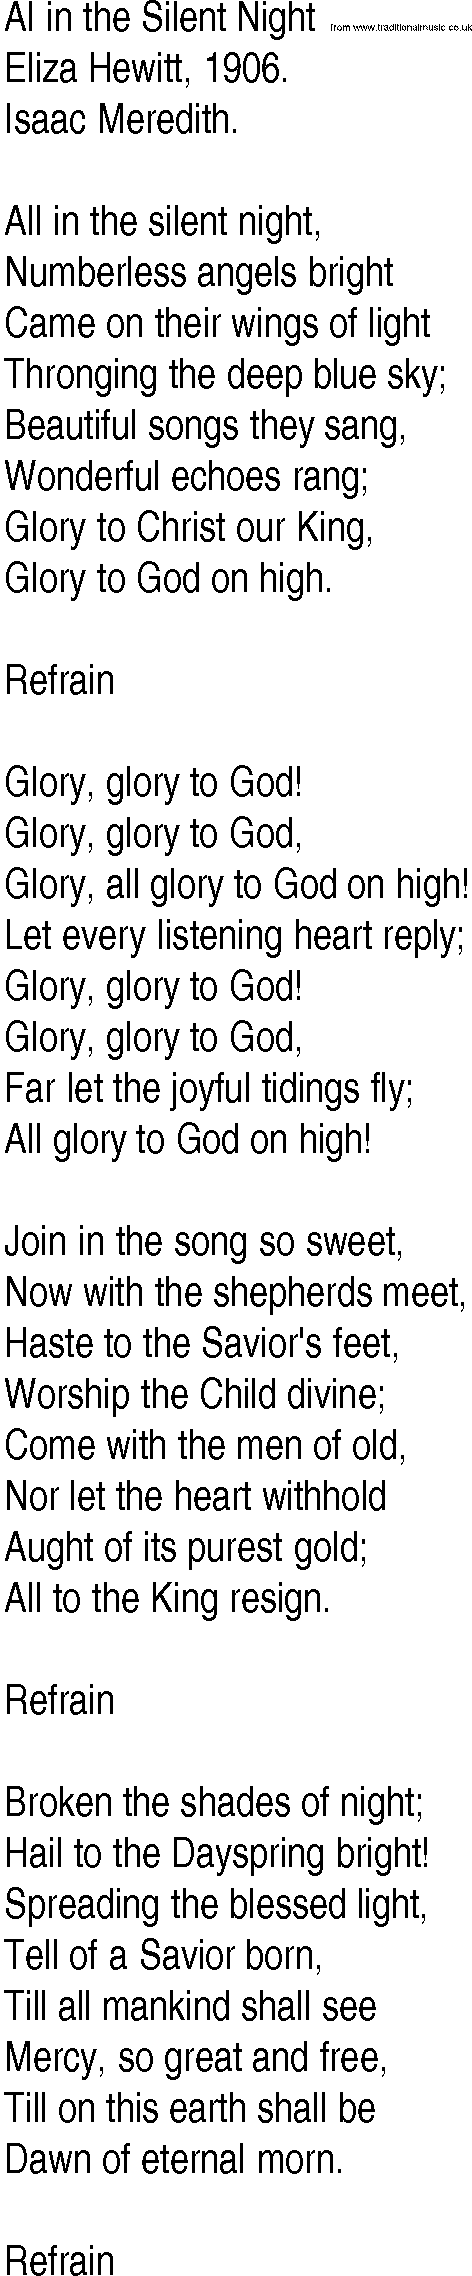 Hymn and Gospel Song: Al in the Silent Night by Eliza Hewitt lyrics